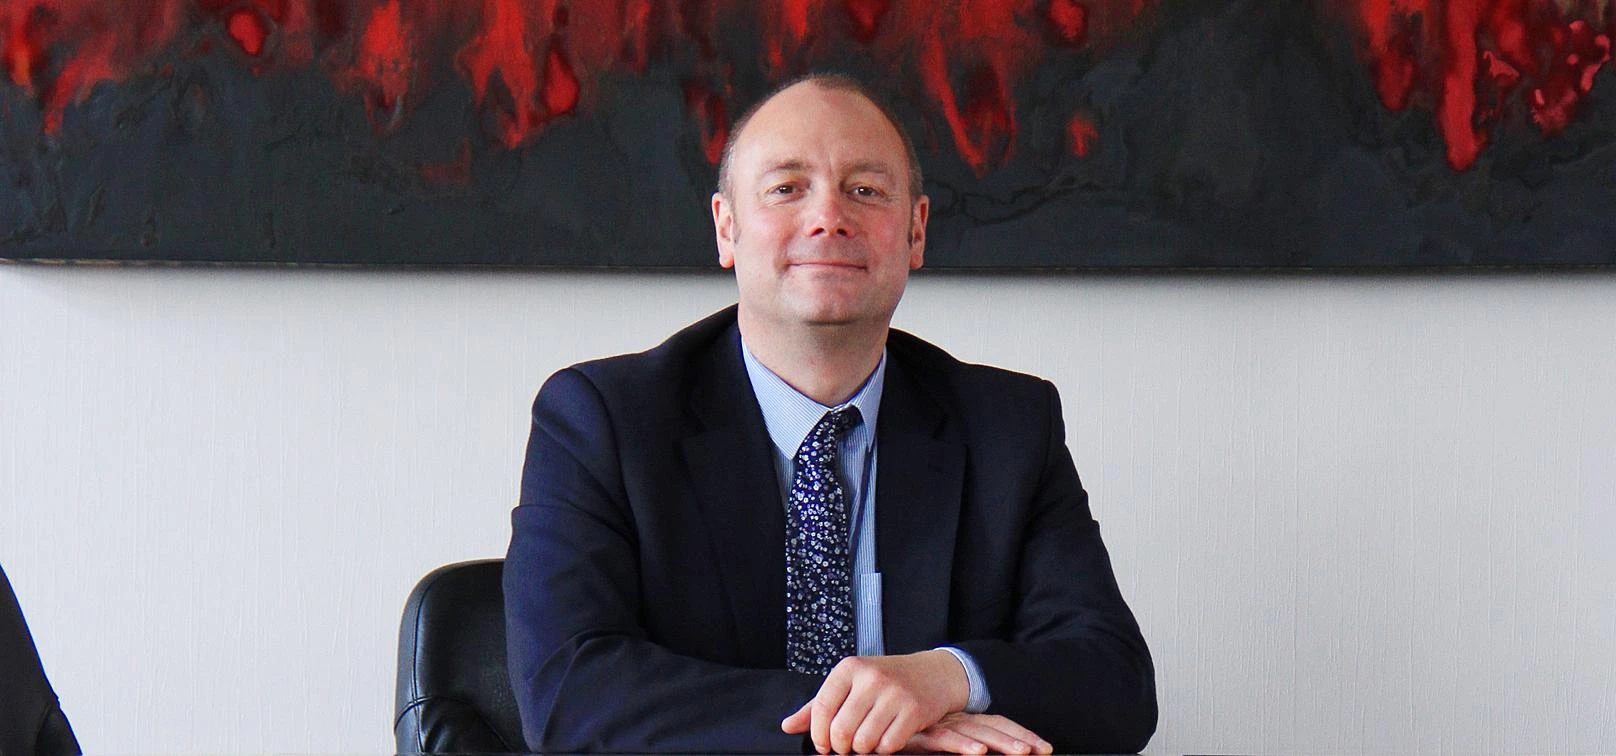 Darren Hankey - Principal of Hartlepool College of Further Education